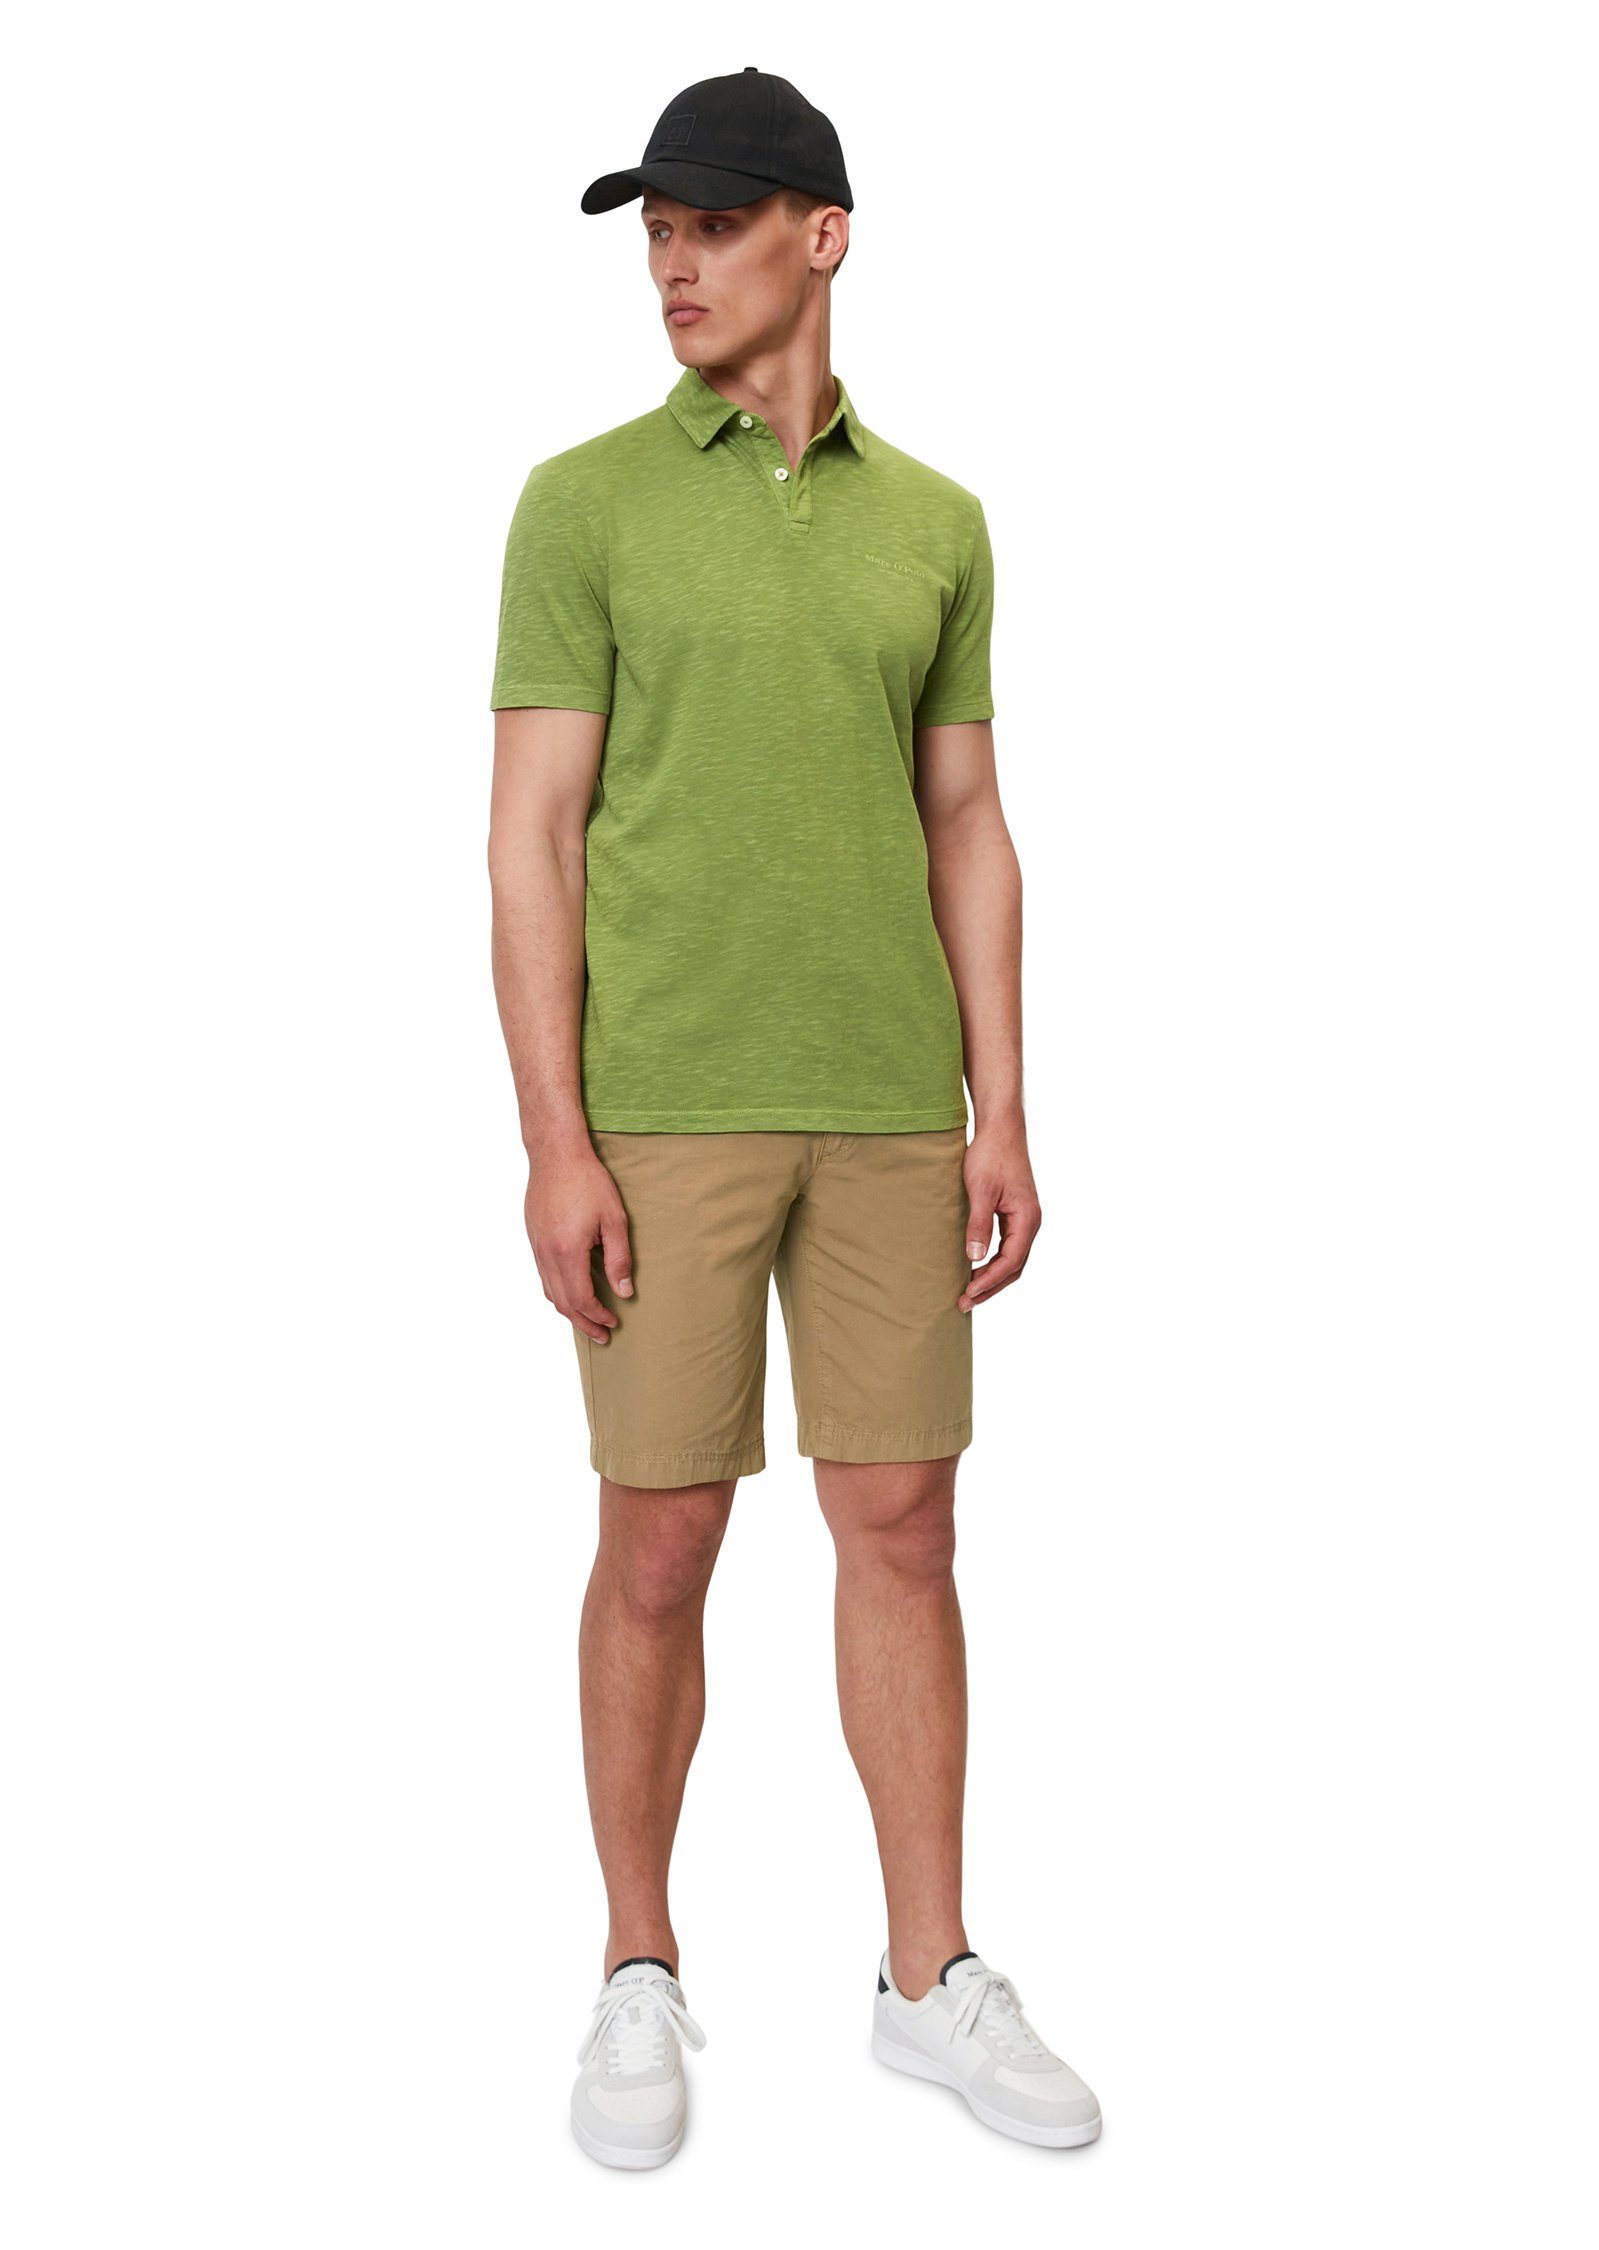 aus O'Polo Marc grün Bio-Baumwolle Poloshirt hochwertiger